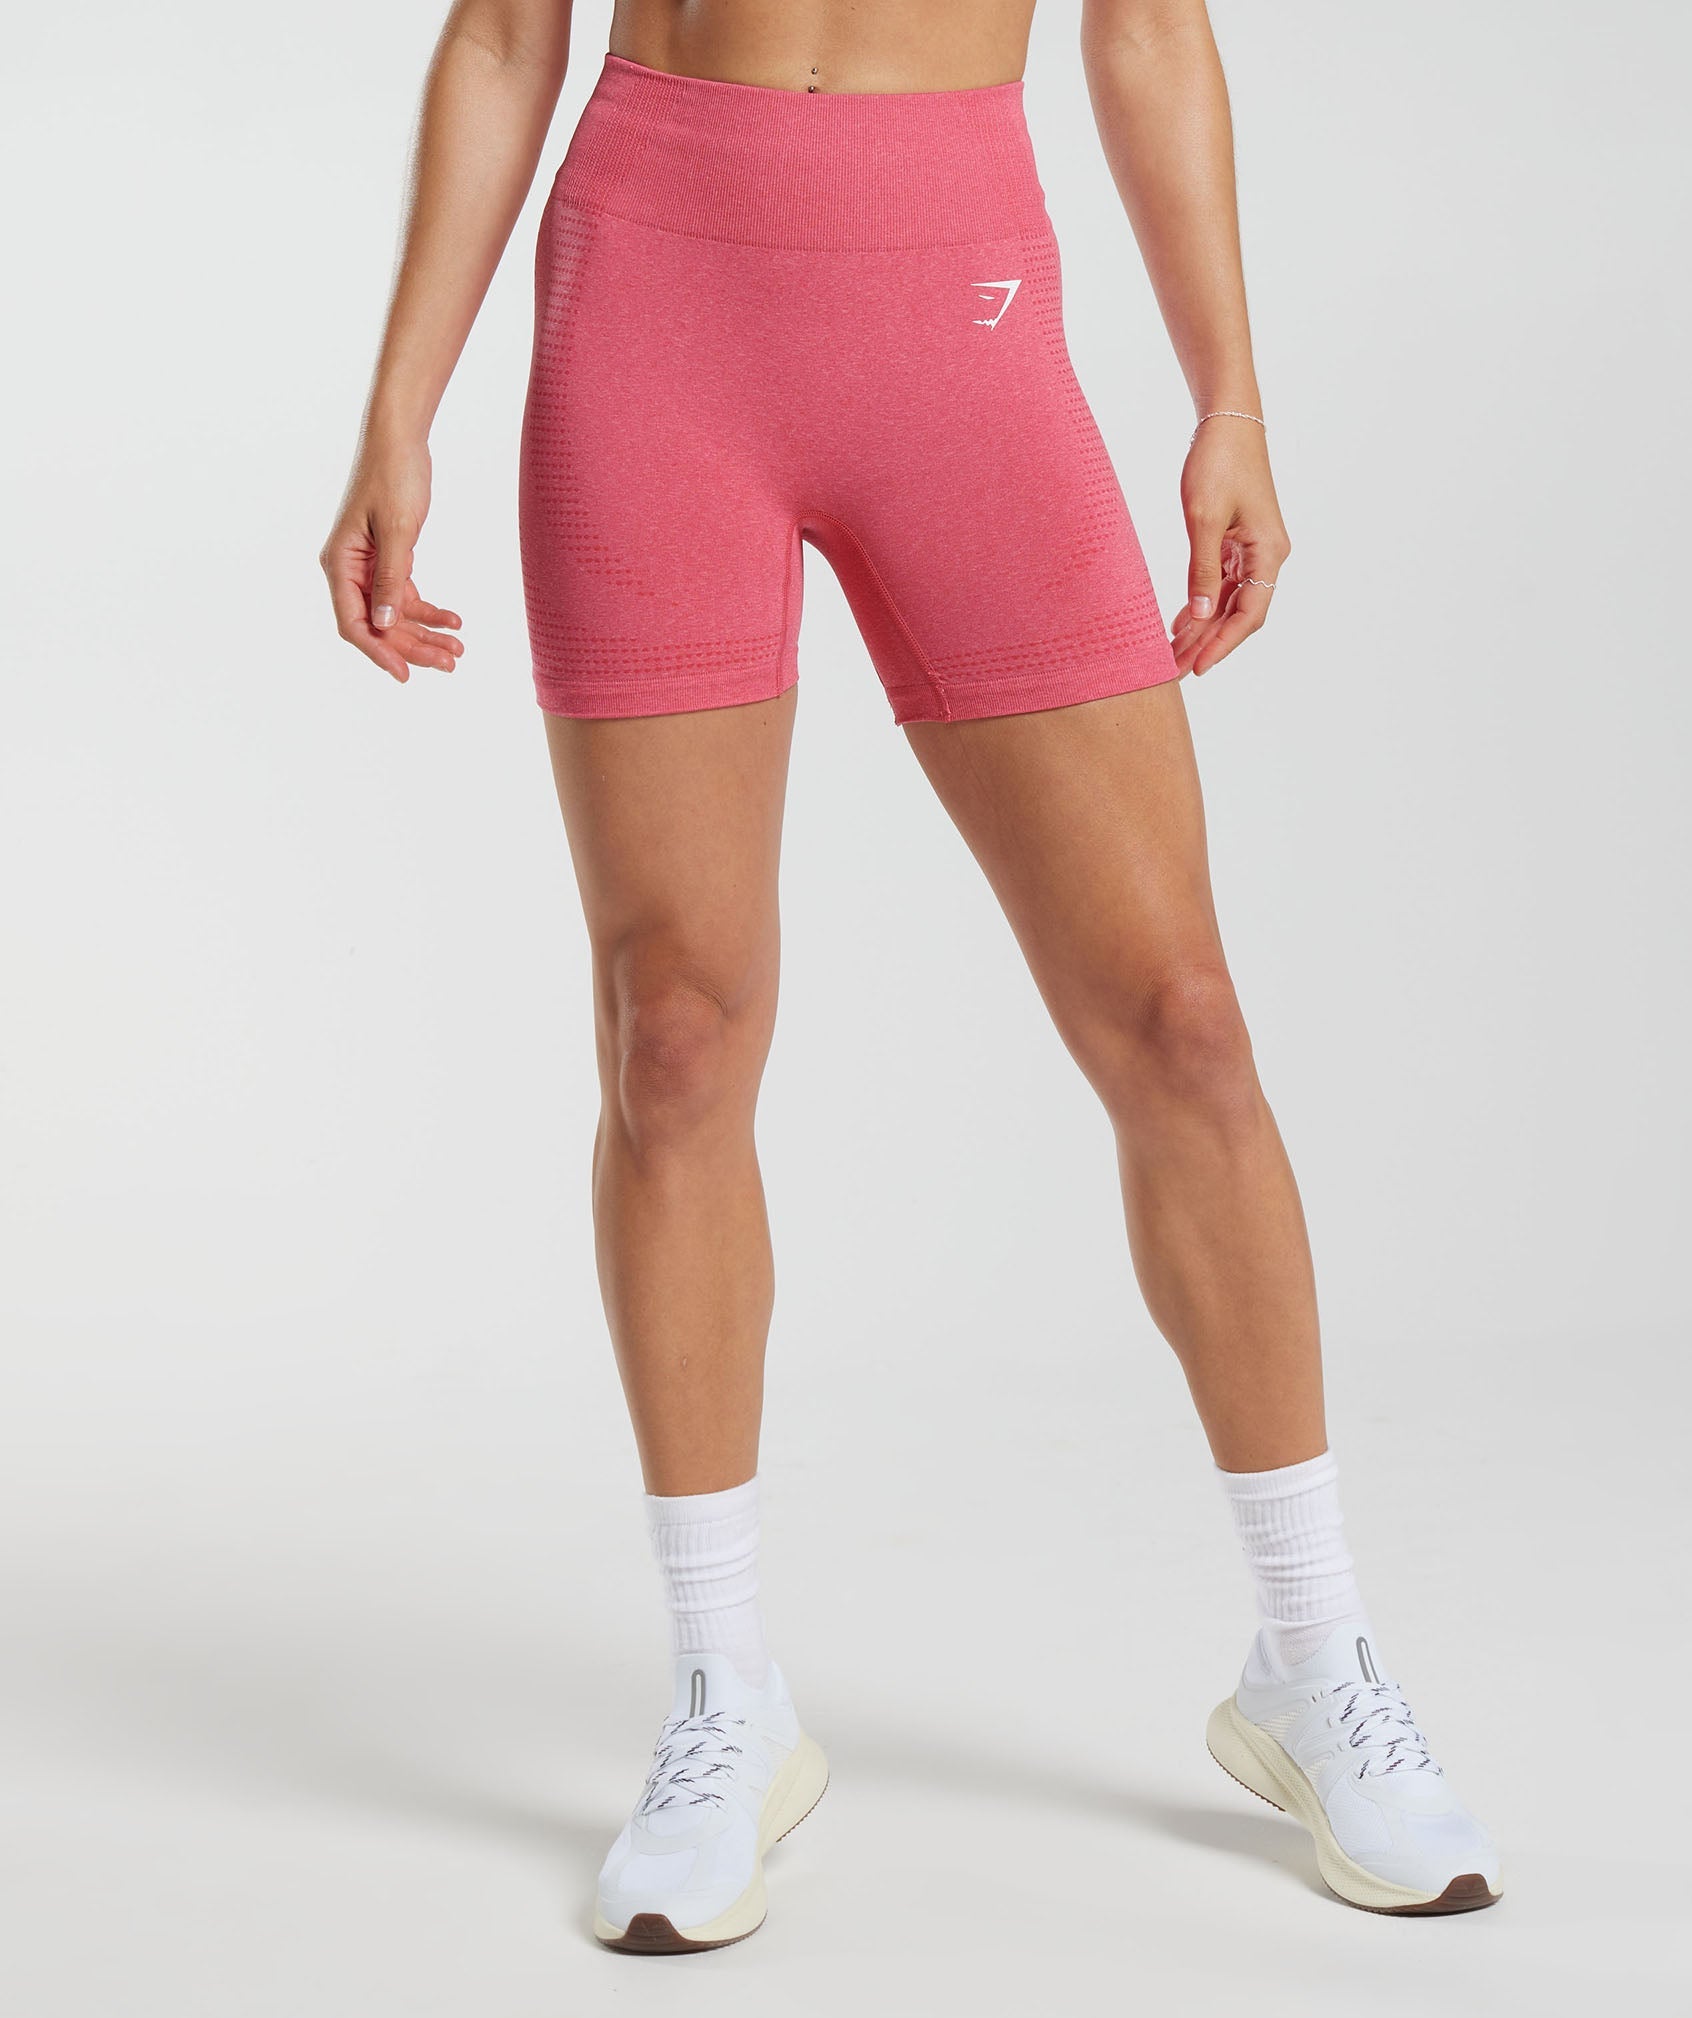 Vital Seamless 2.0 Shorts in Bright Fuchsia Marl